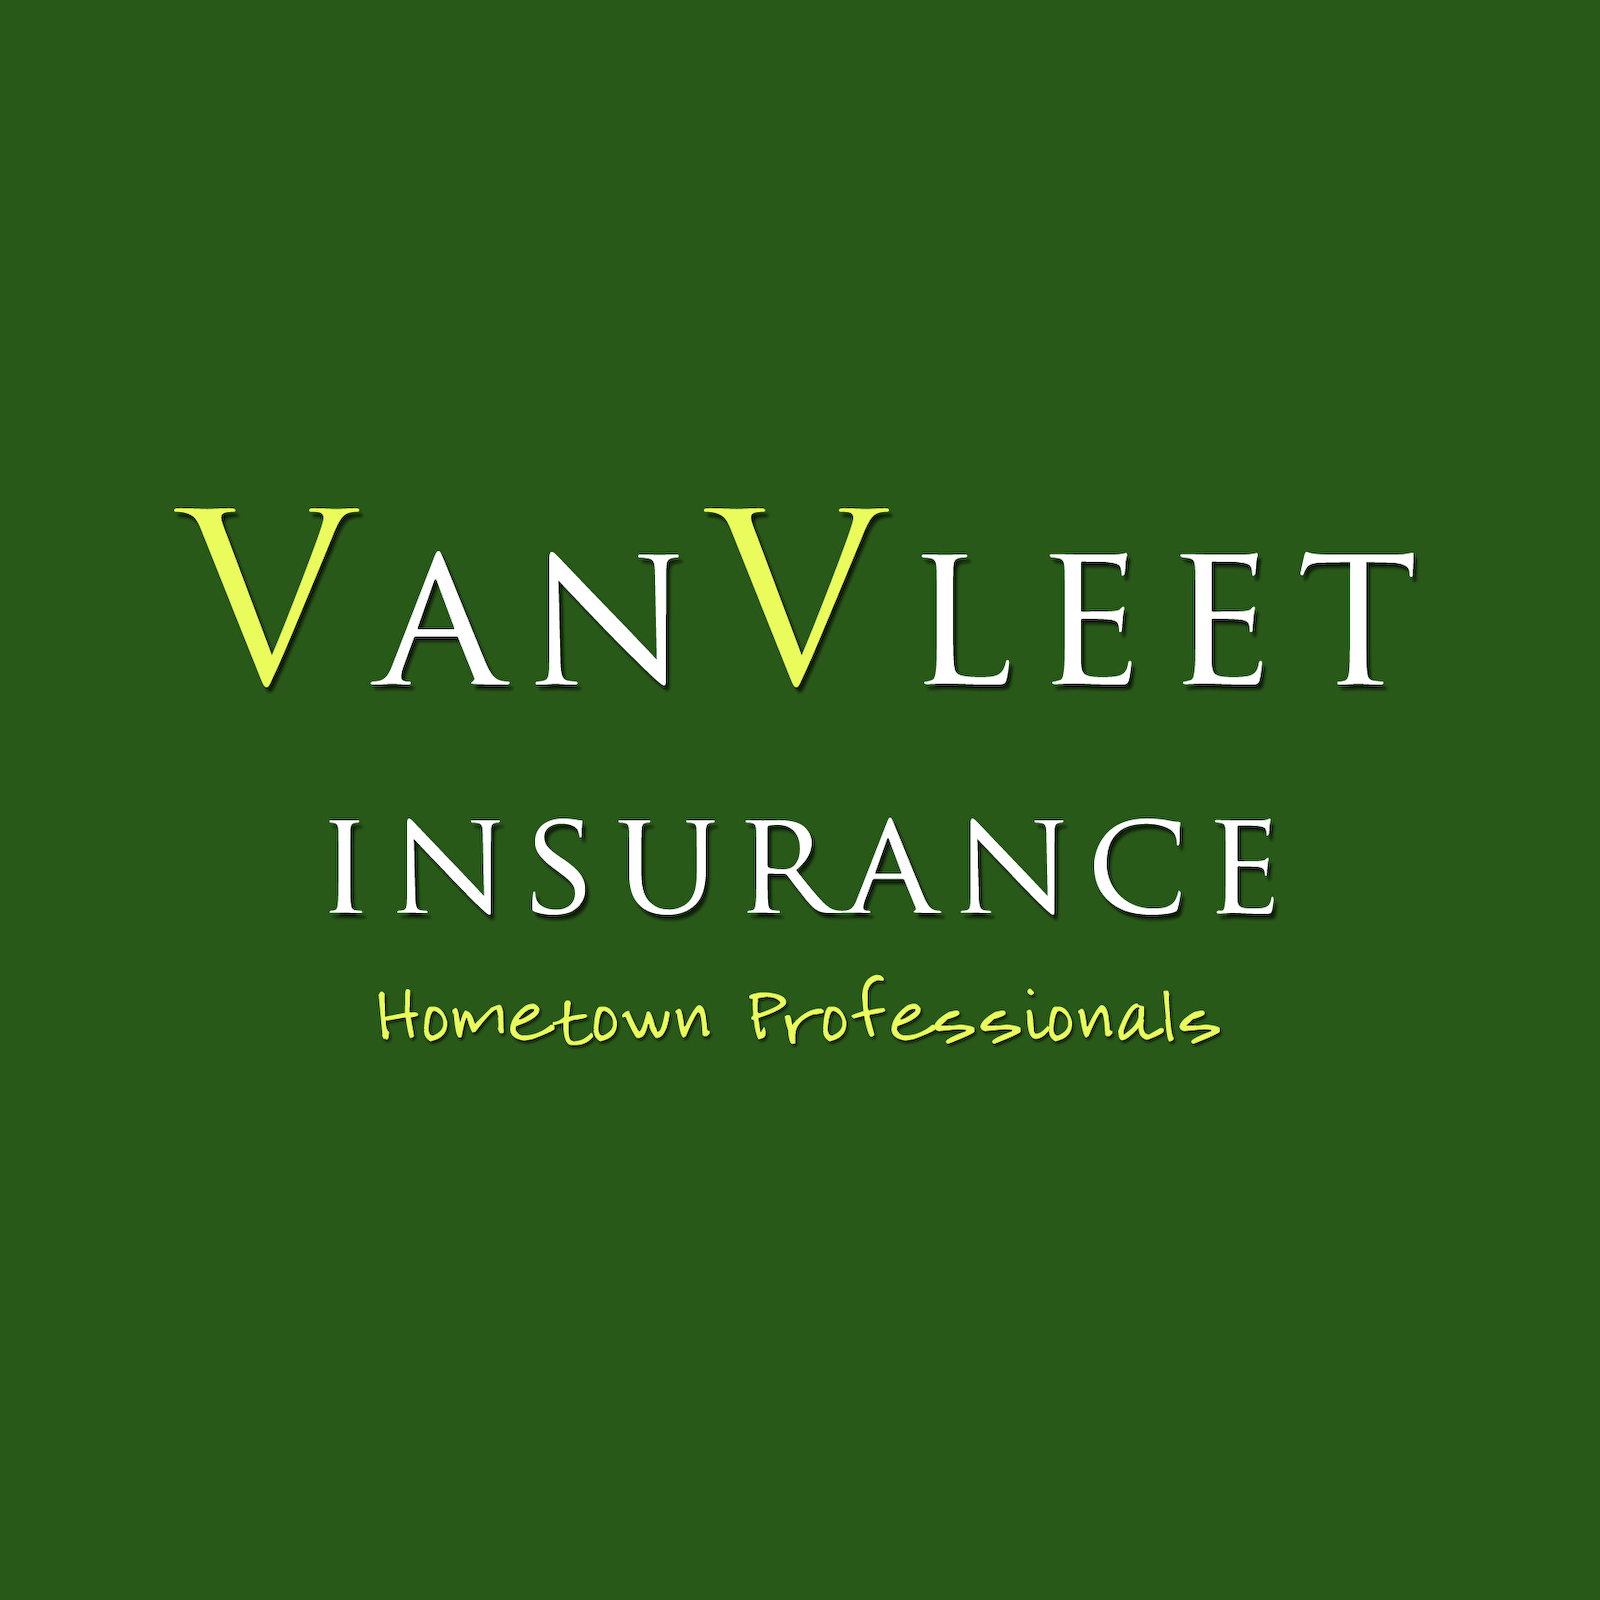 Van Vleet Insurance